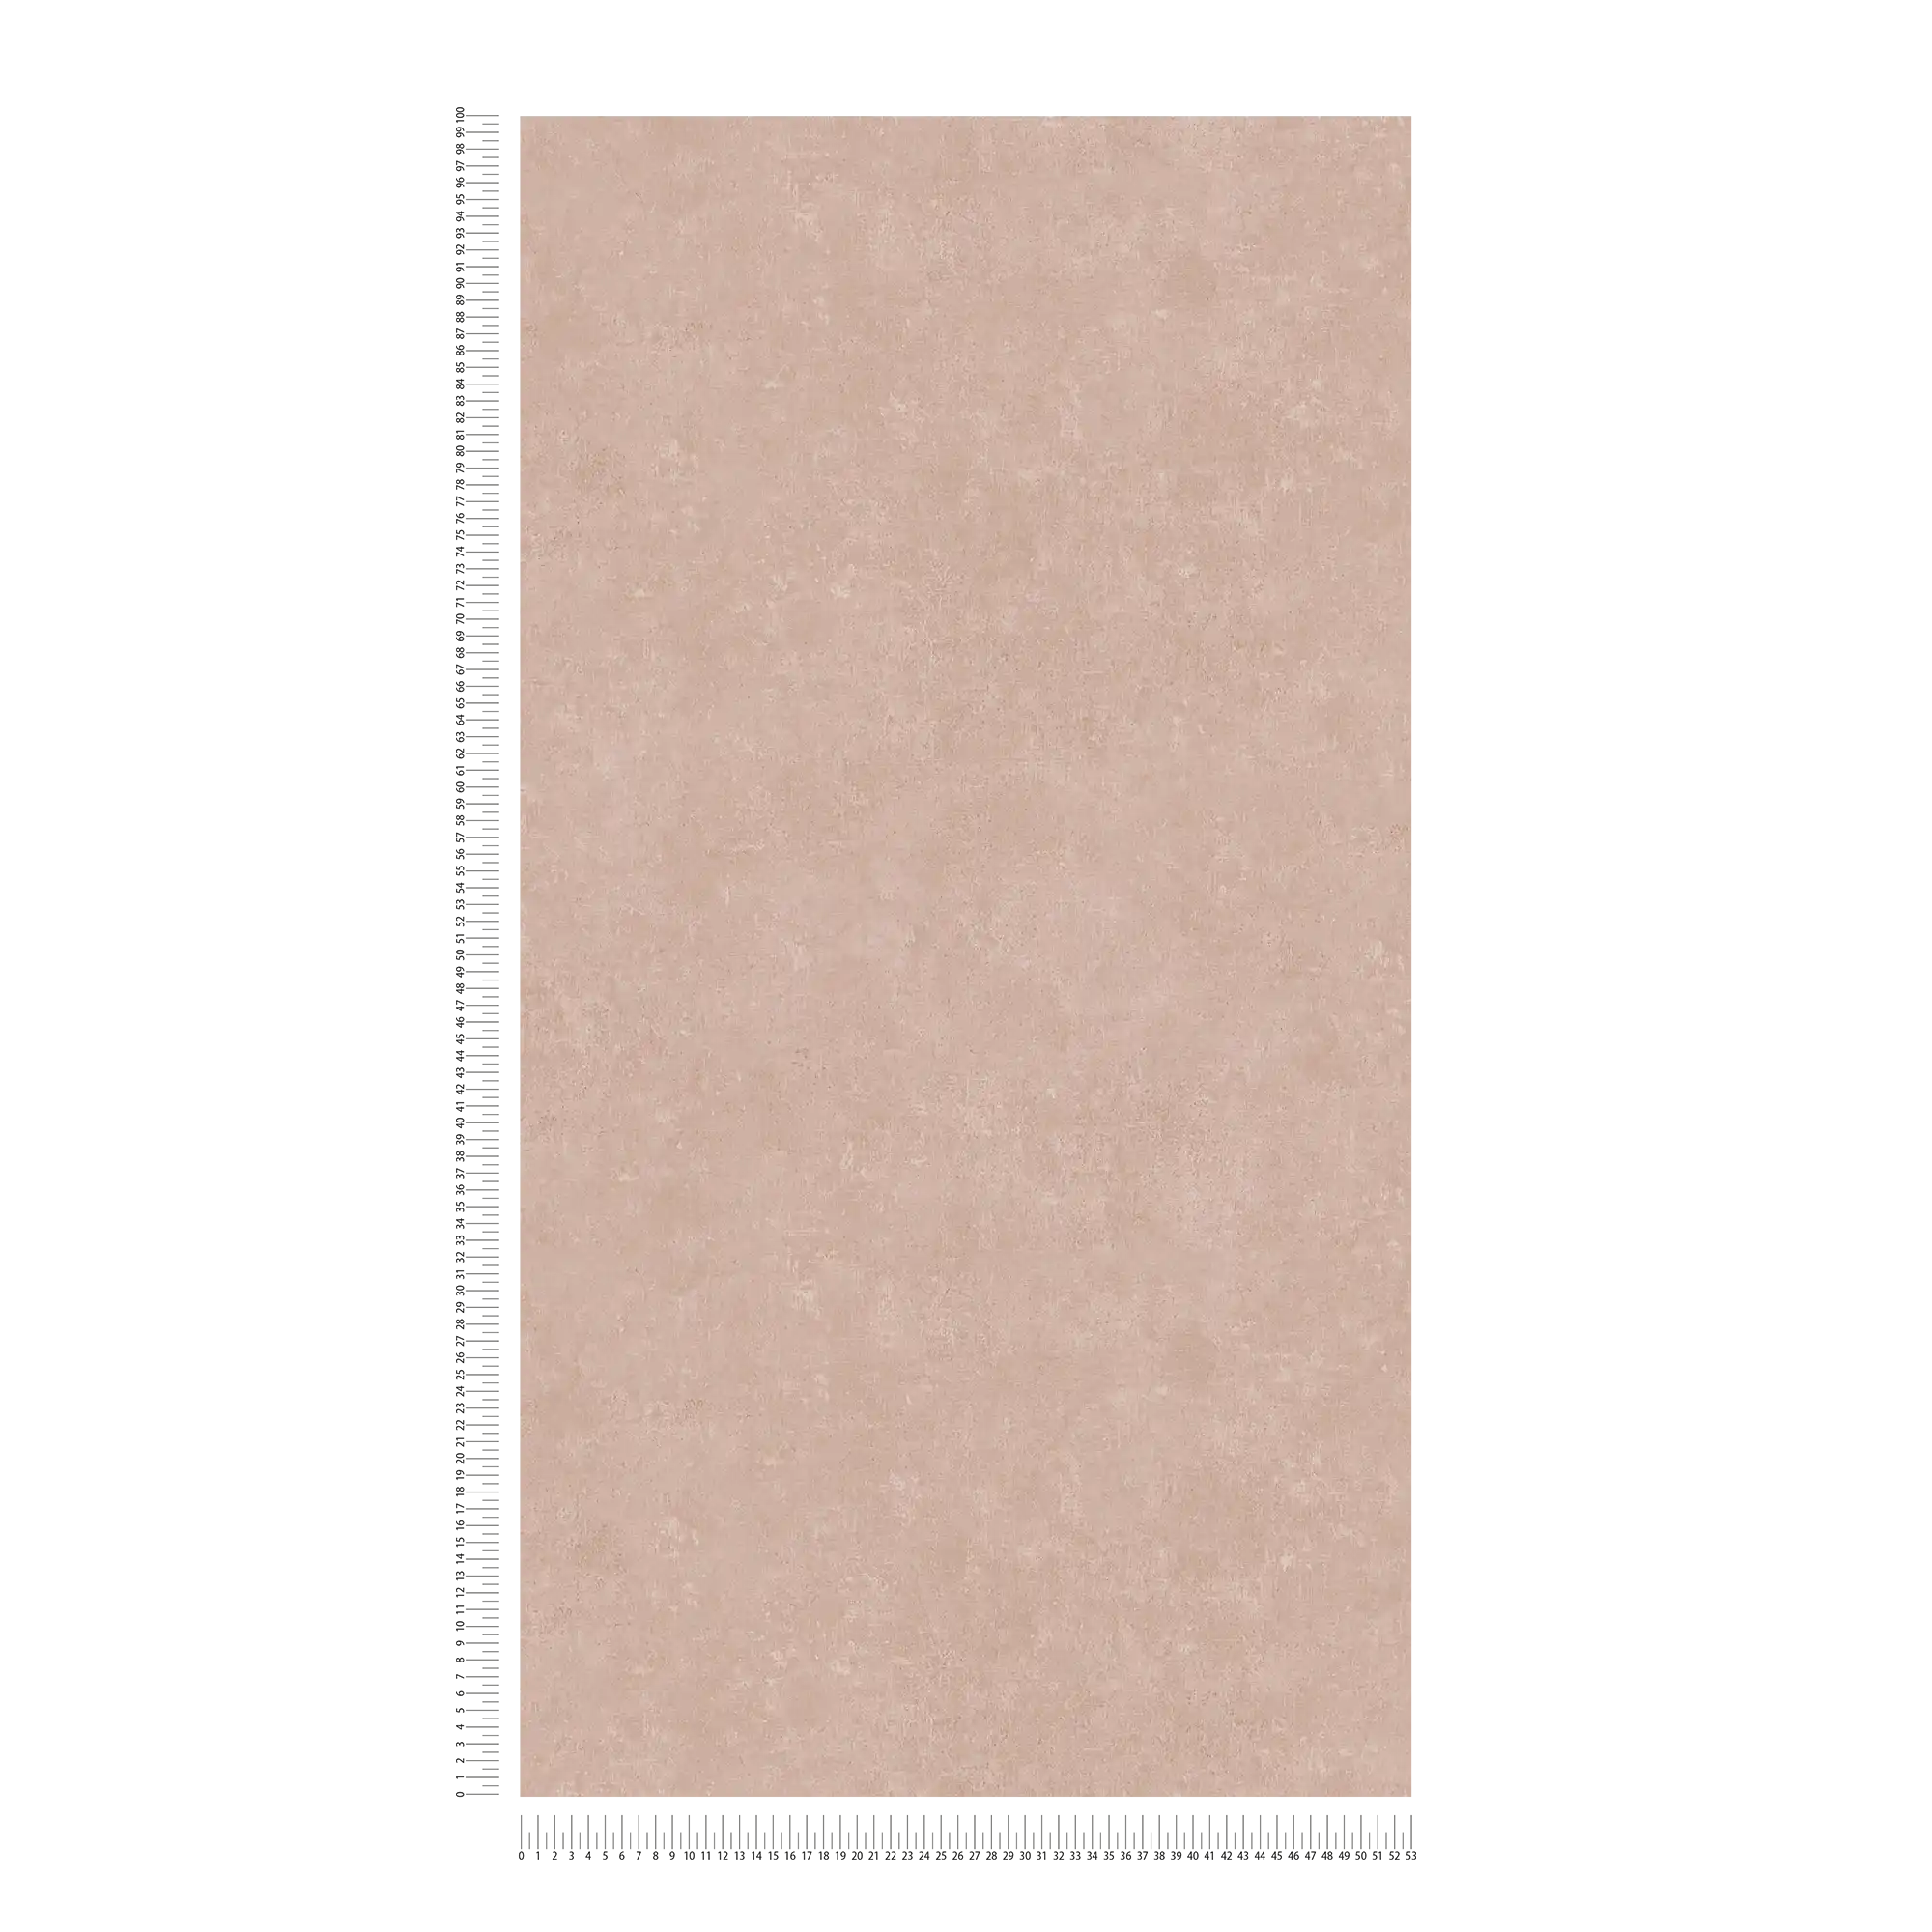             Papel pintado de tejido no tejido con diseño tono sobre tono, aspecto usado - rosa
        